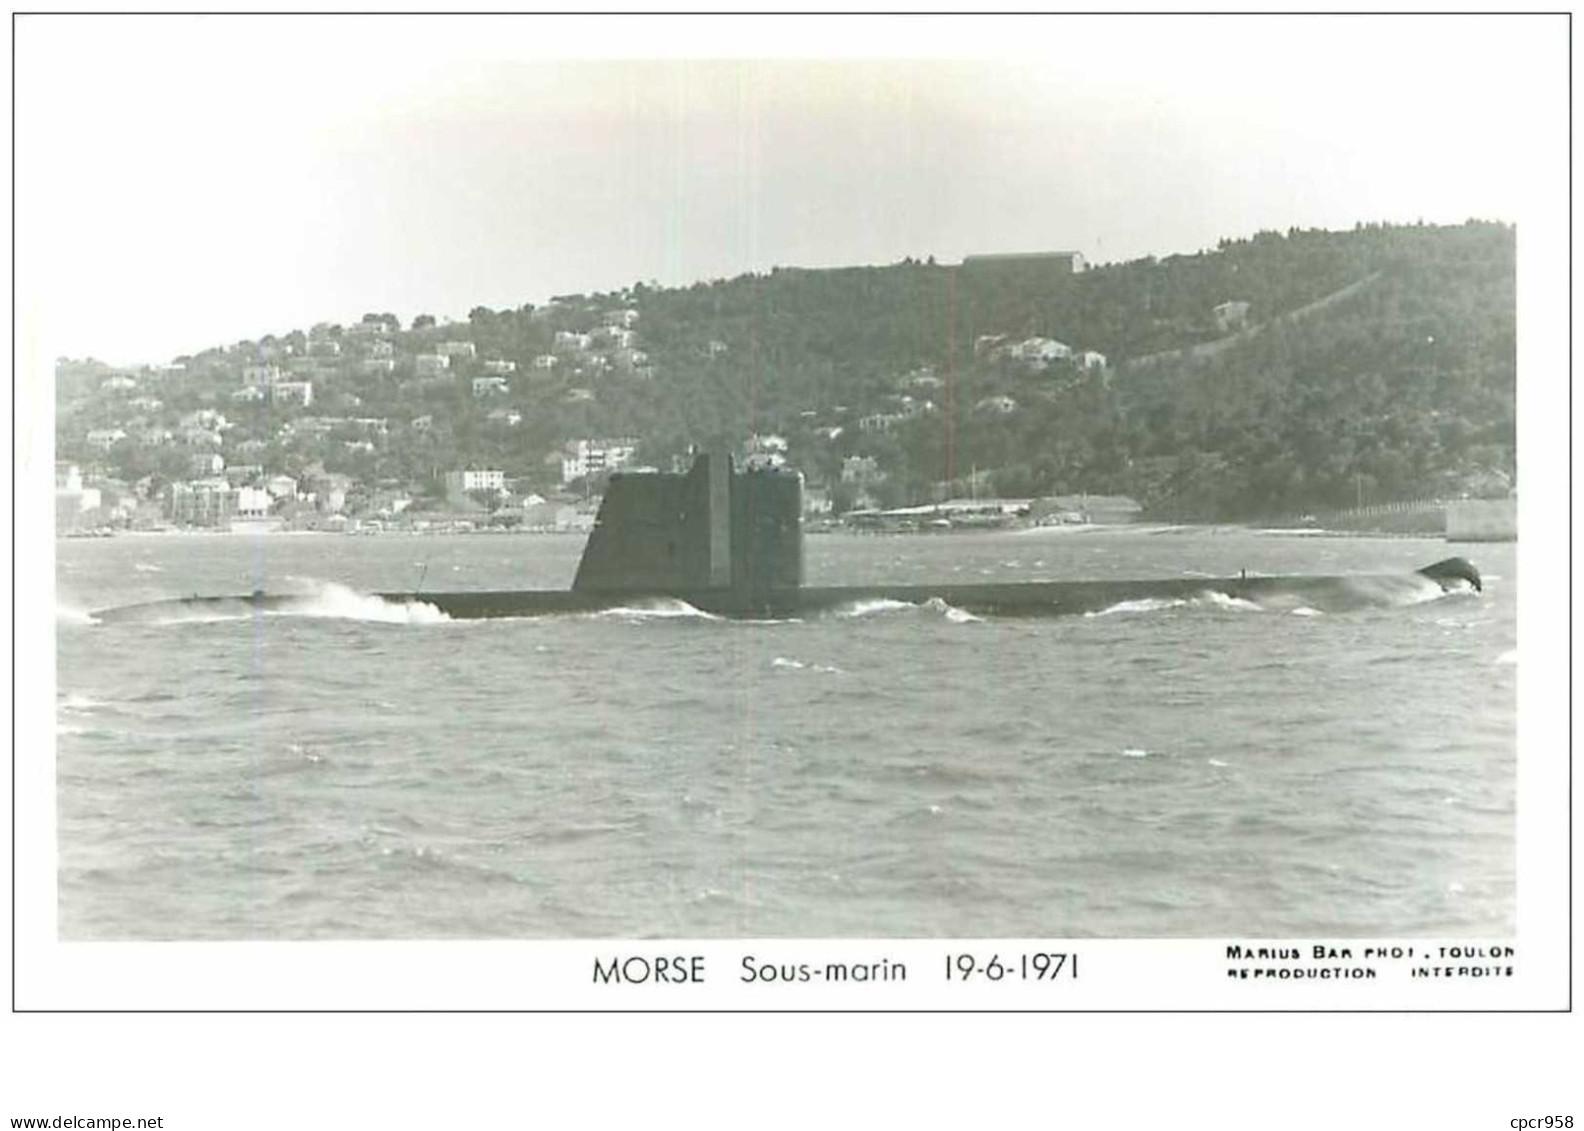 SOUS-MARINS.n°24880.PHOTO DE MARIUS BAR.MORSE.19.6.1971 - Sous-marins